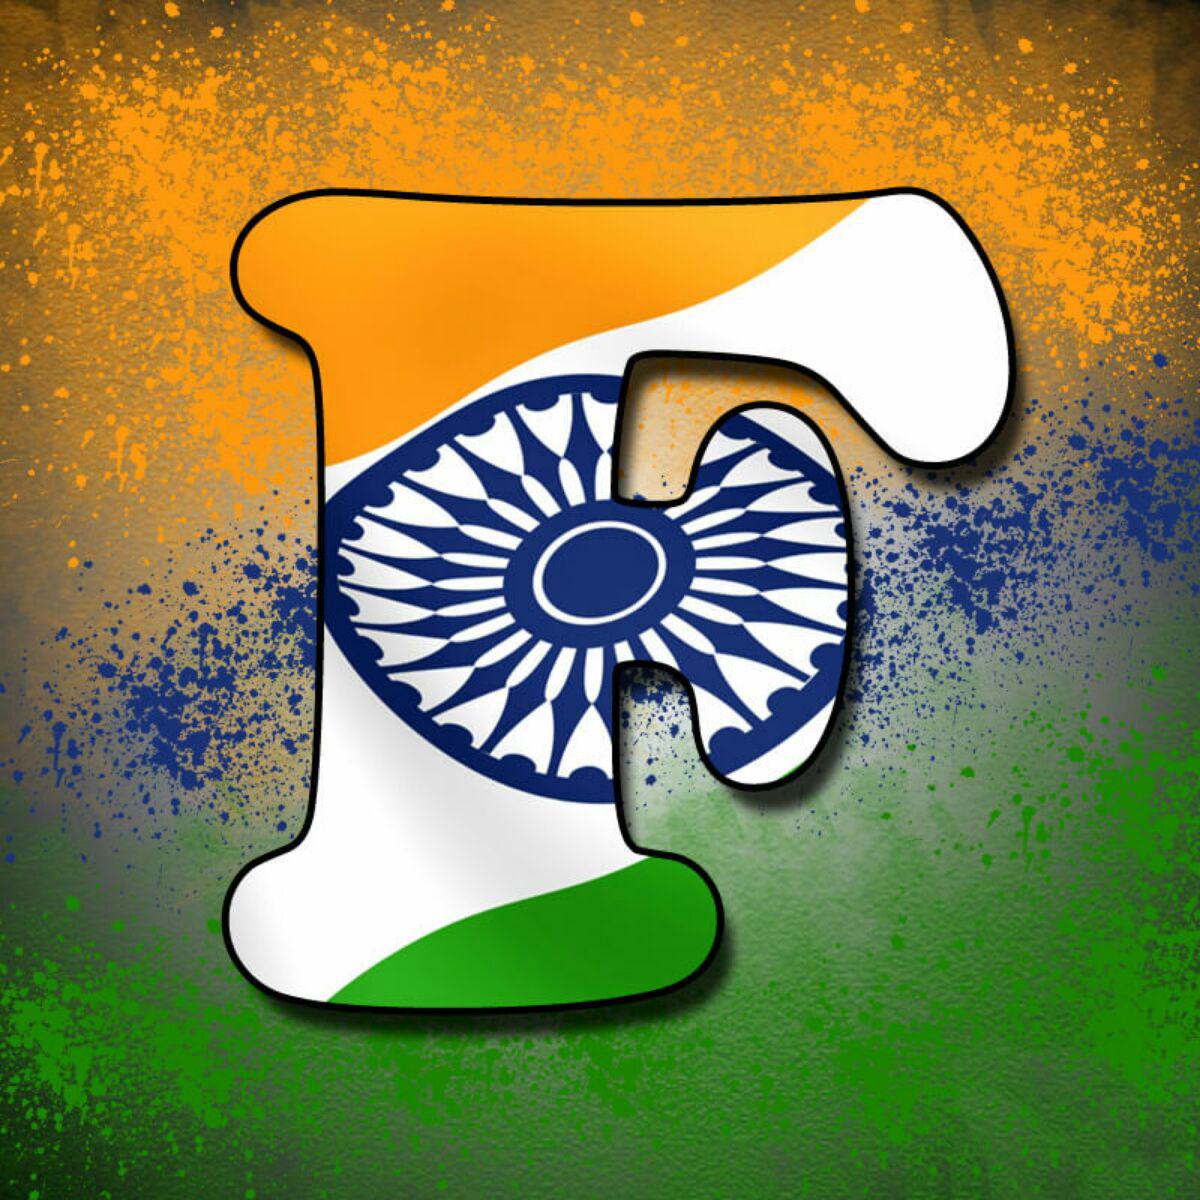 Tiranga Image Hd Indian Flag Photo Free Wallpaper Download 15 August Whatsapp Dp 1200x1200 Wallpaper Teahub Io